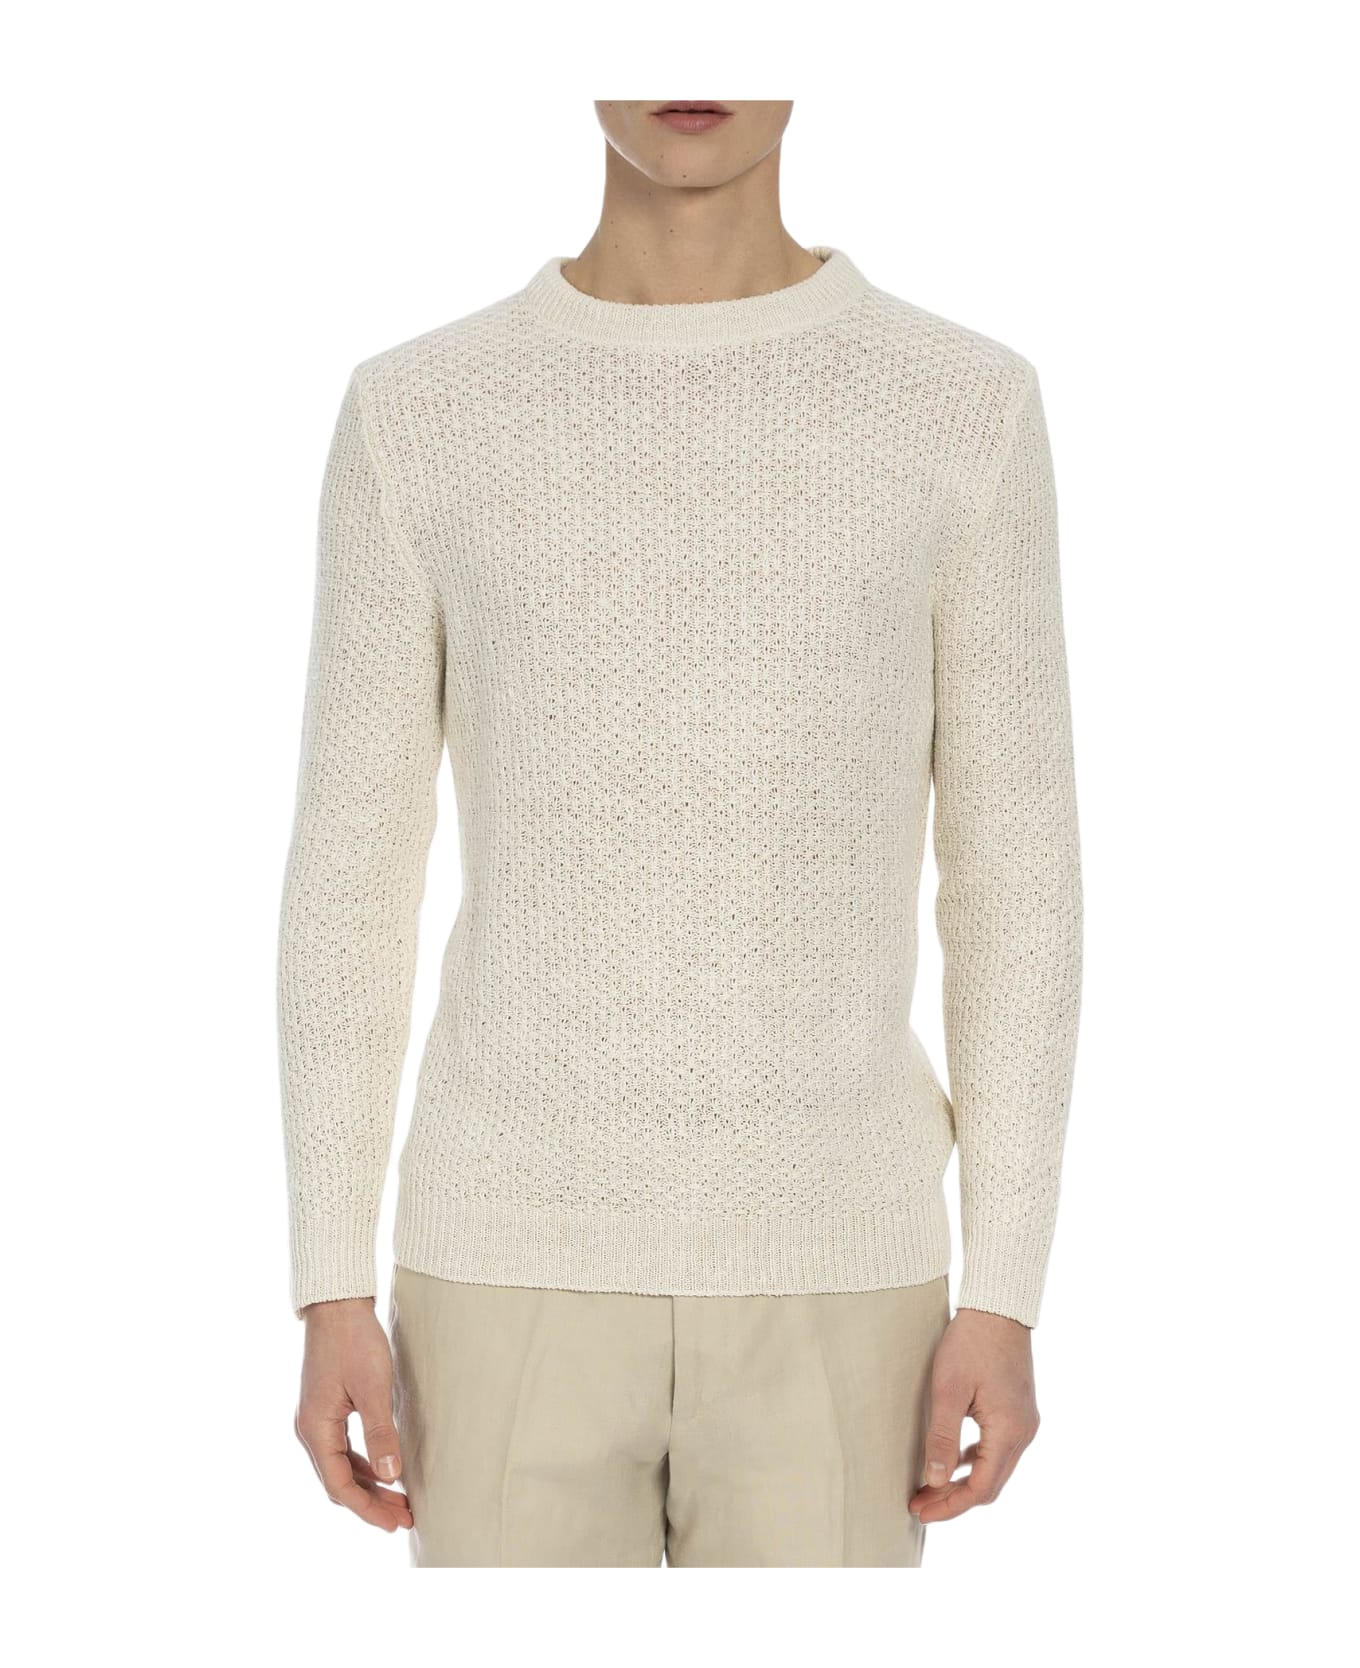 Larusmiani 'meadow Lane' Sweater Sweater - Ivory ニットウェア